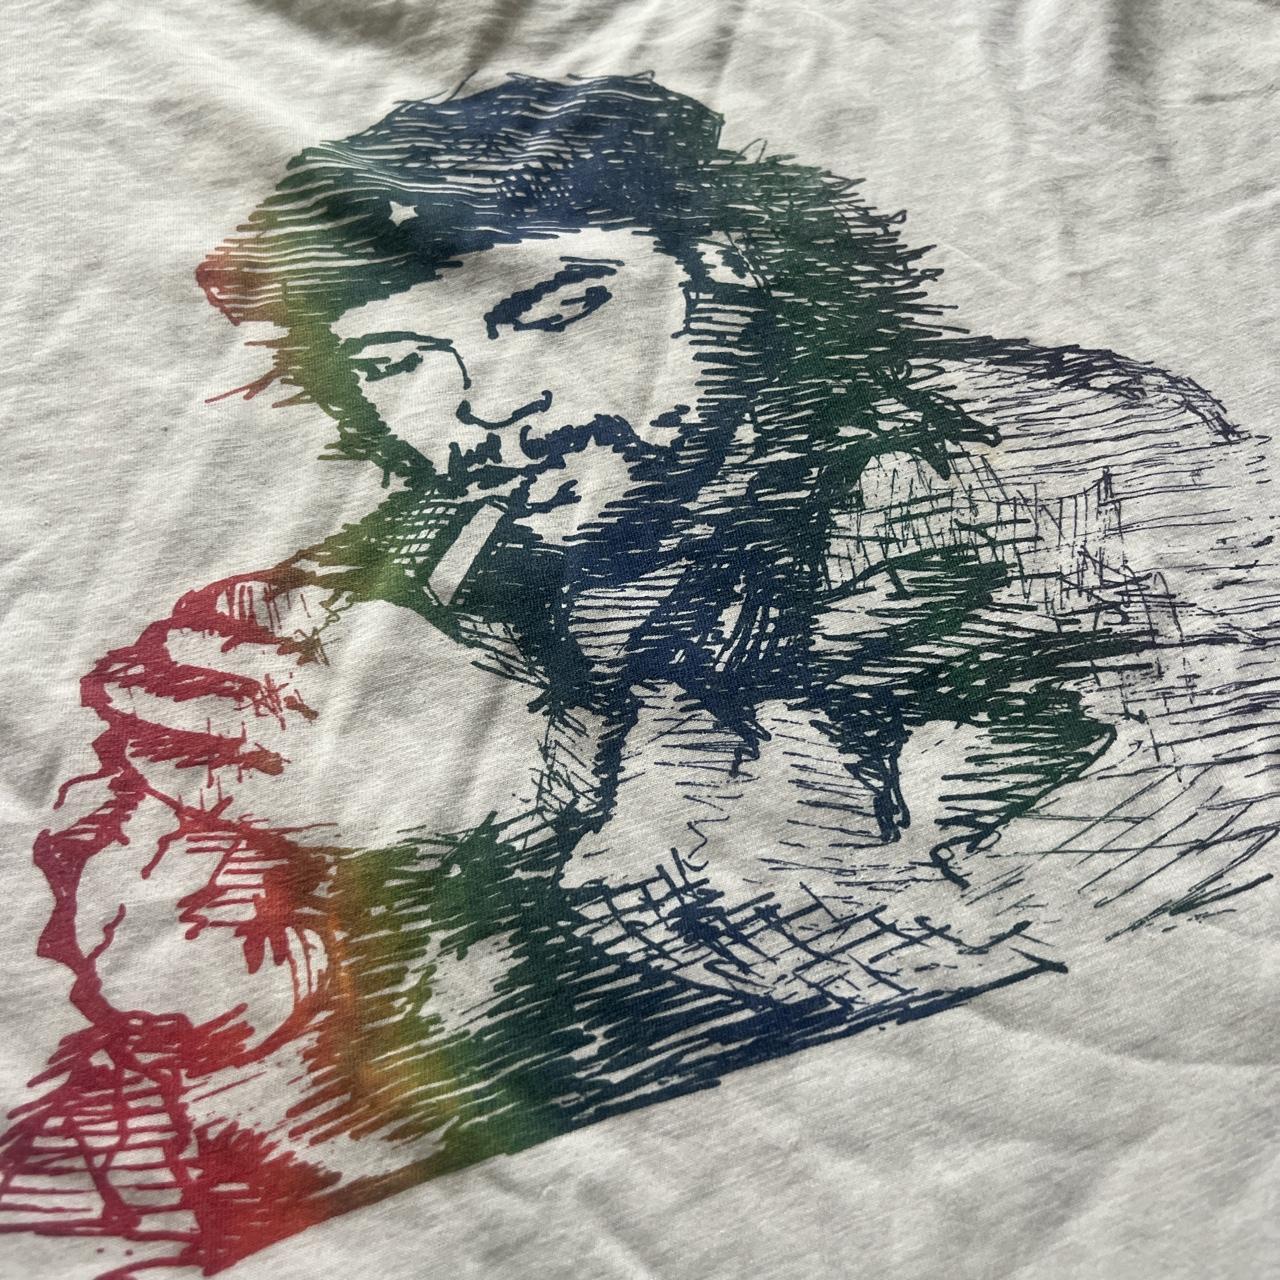 Vintage 80s Che Guevara shirt, super rare never seen - Depop